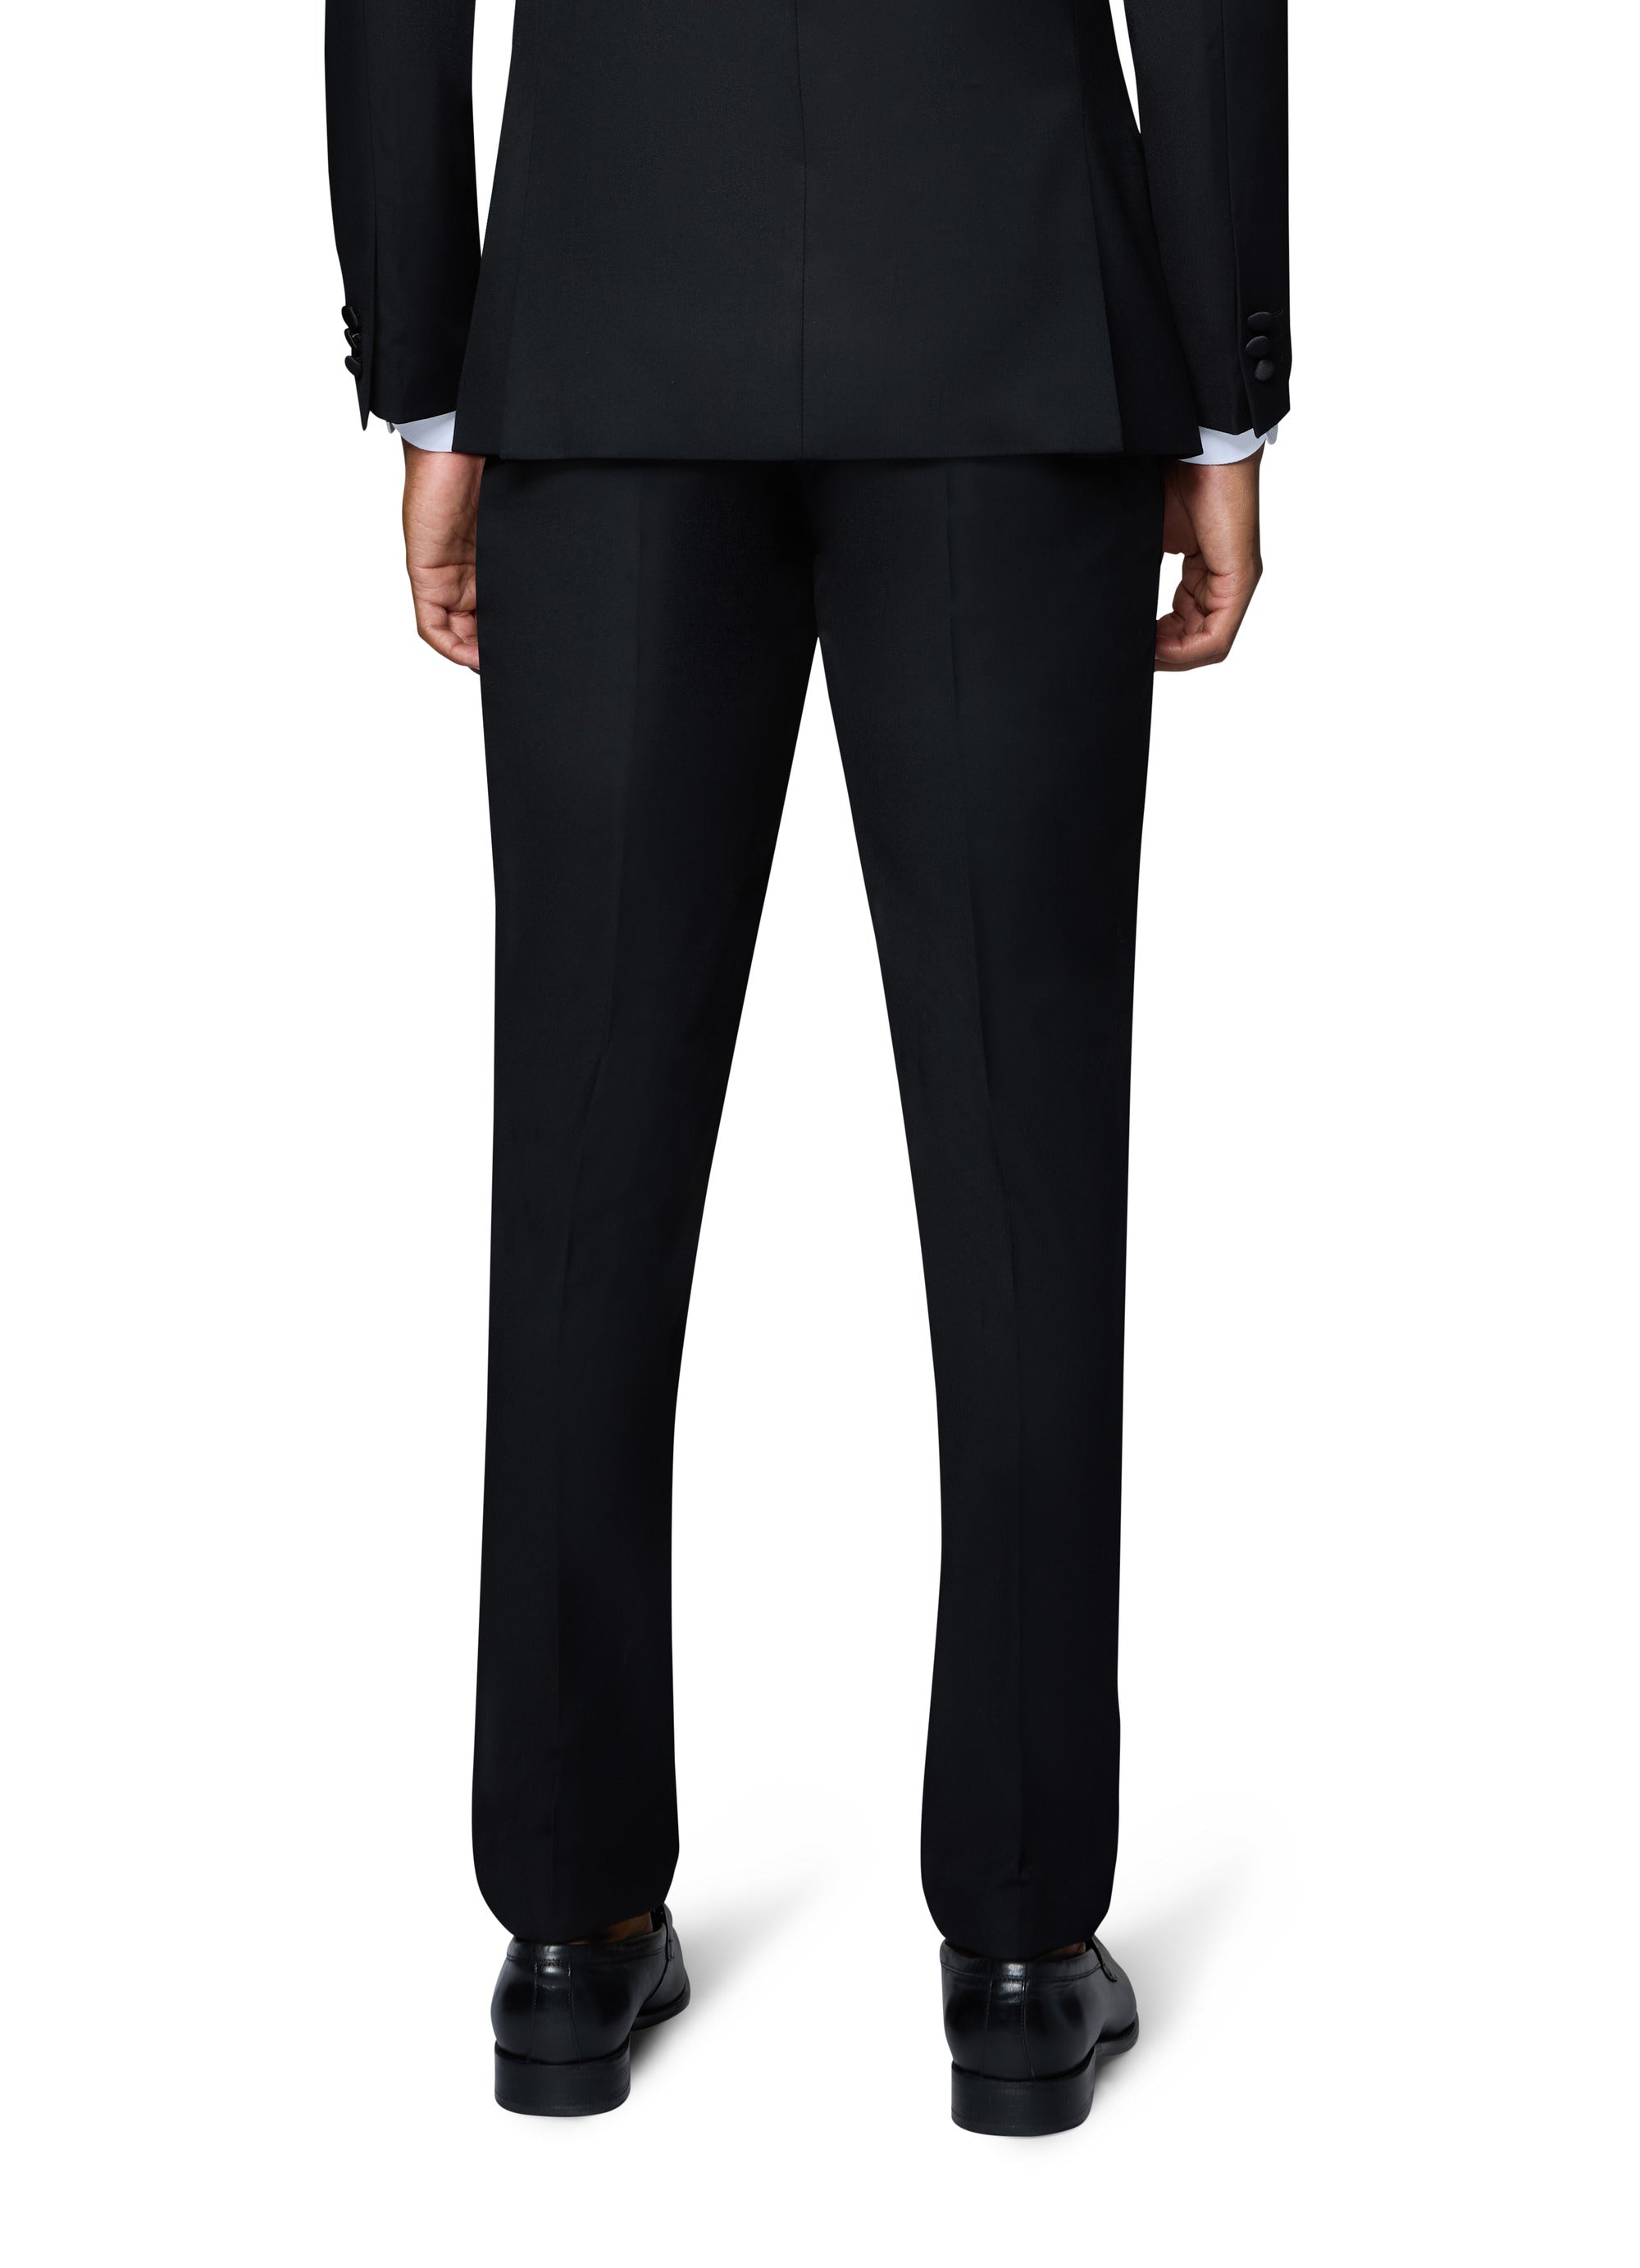 Berragamo Solid Black Notch Tuxedo Modern Fit